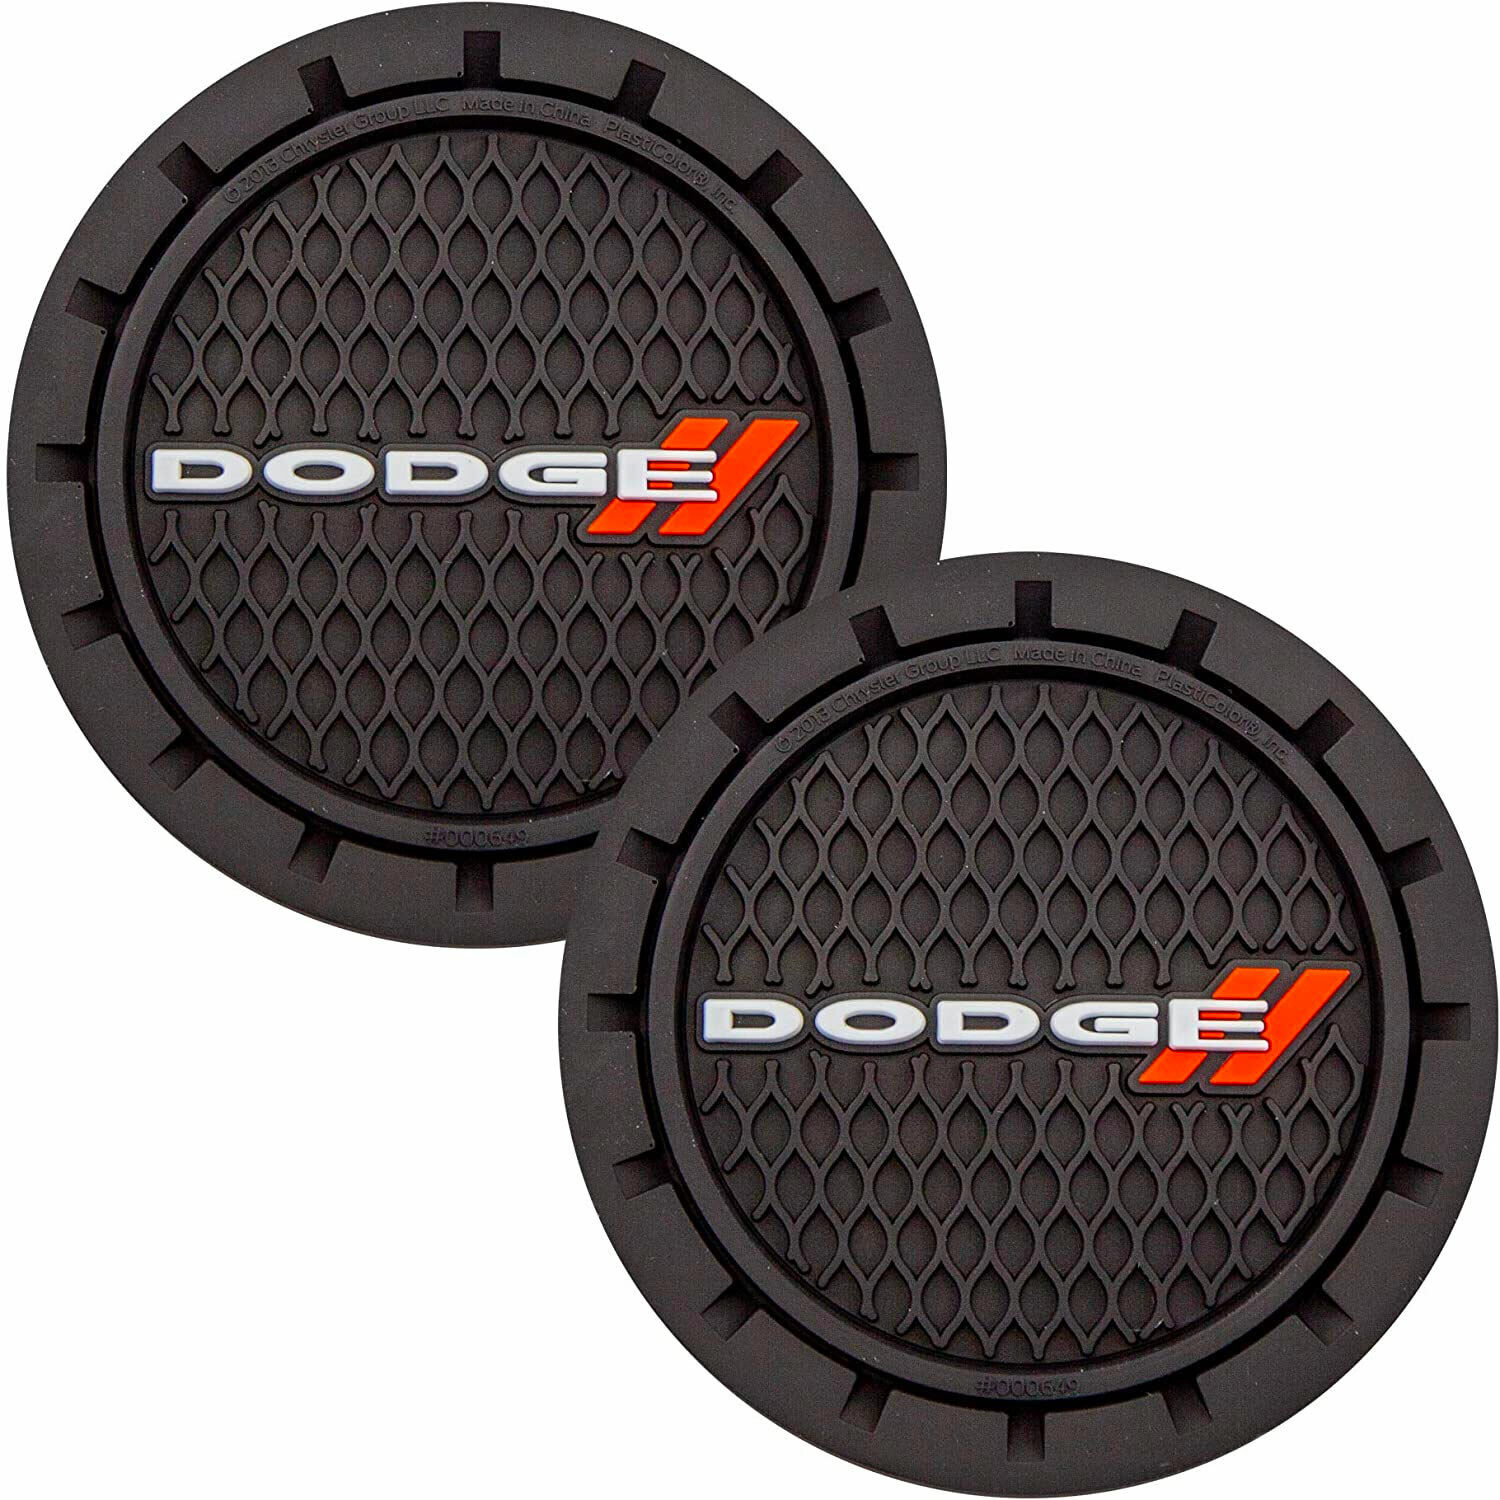 Plasticolor Dodge Car Coaster, 2x Cupholder Coasters with the Dodge Logo